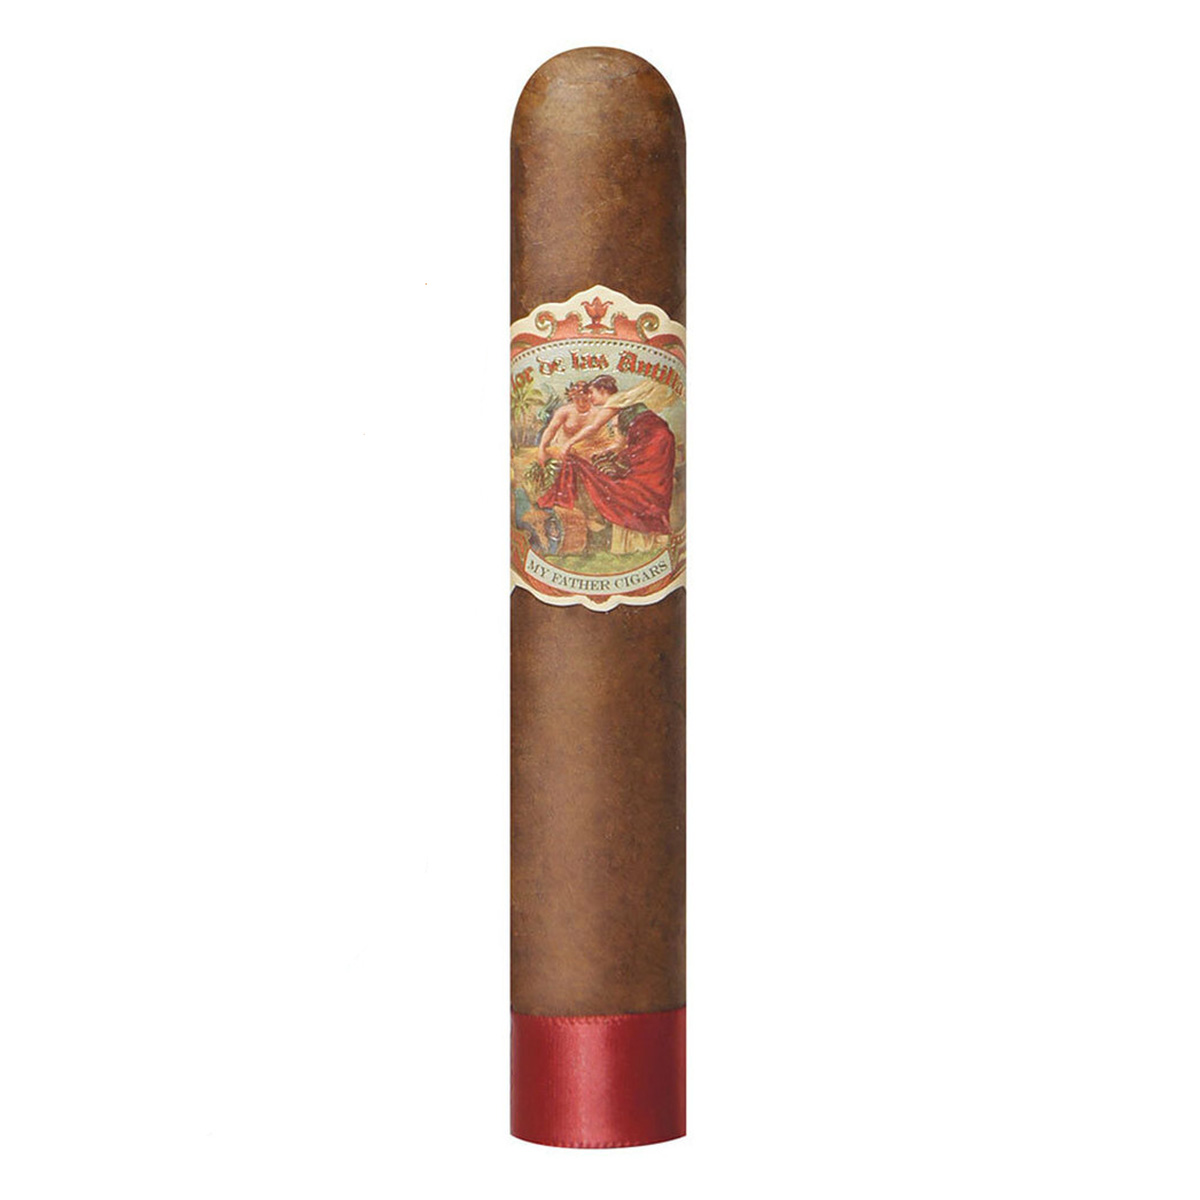 New World Cigar Sampler Pack - Nicaragua (Medium)